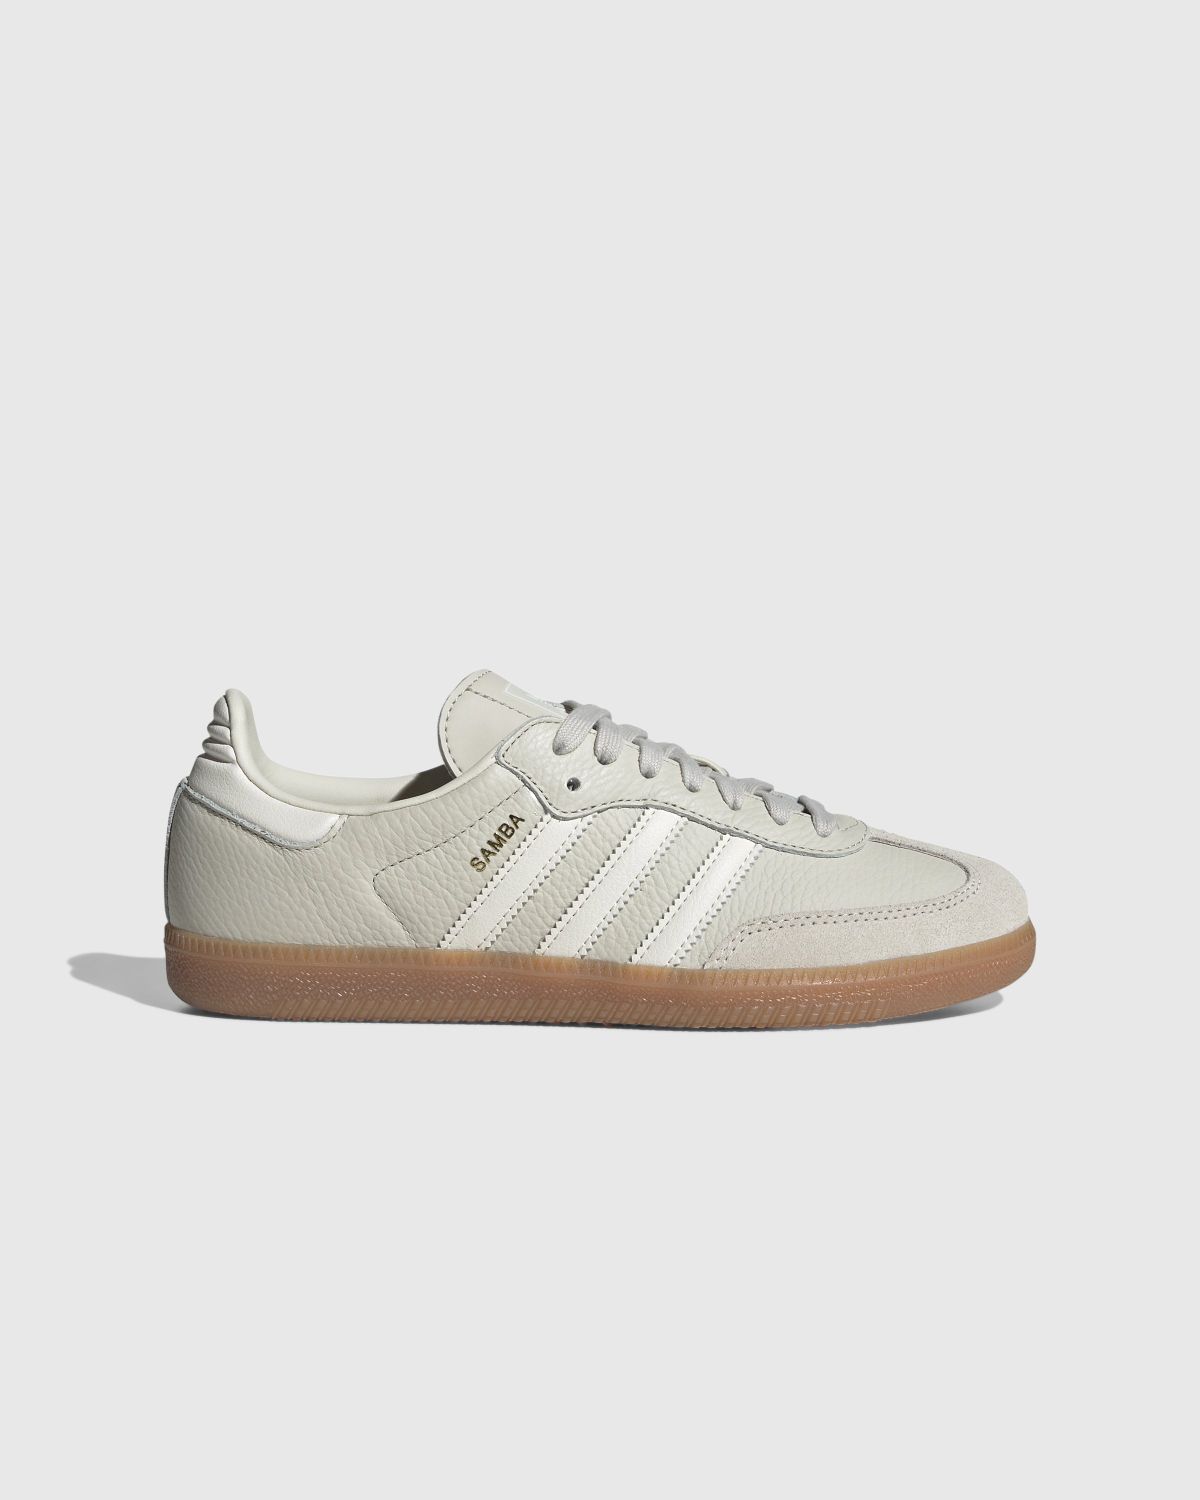 Adidas – Samba OG White/Aluminium - Sneakers - White - Image 1